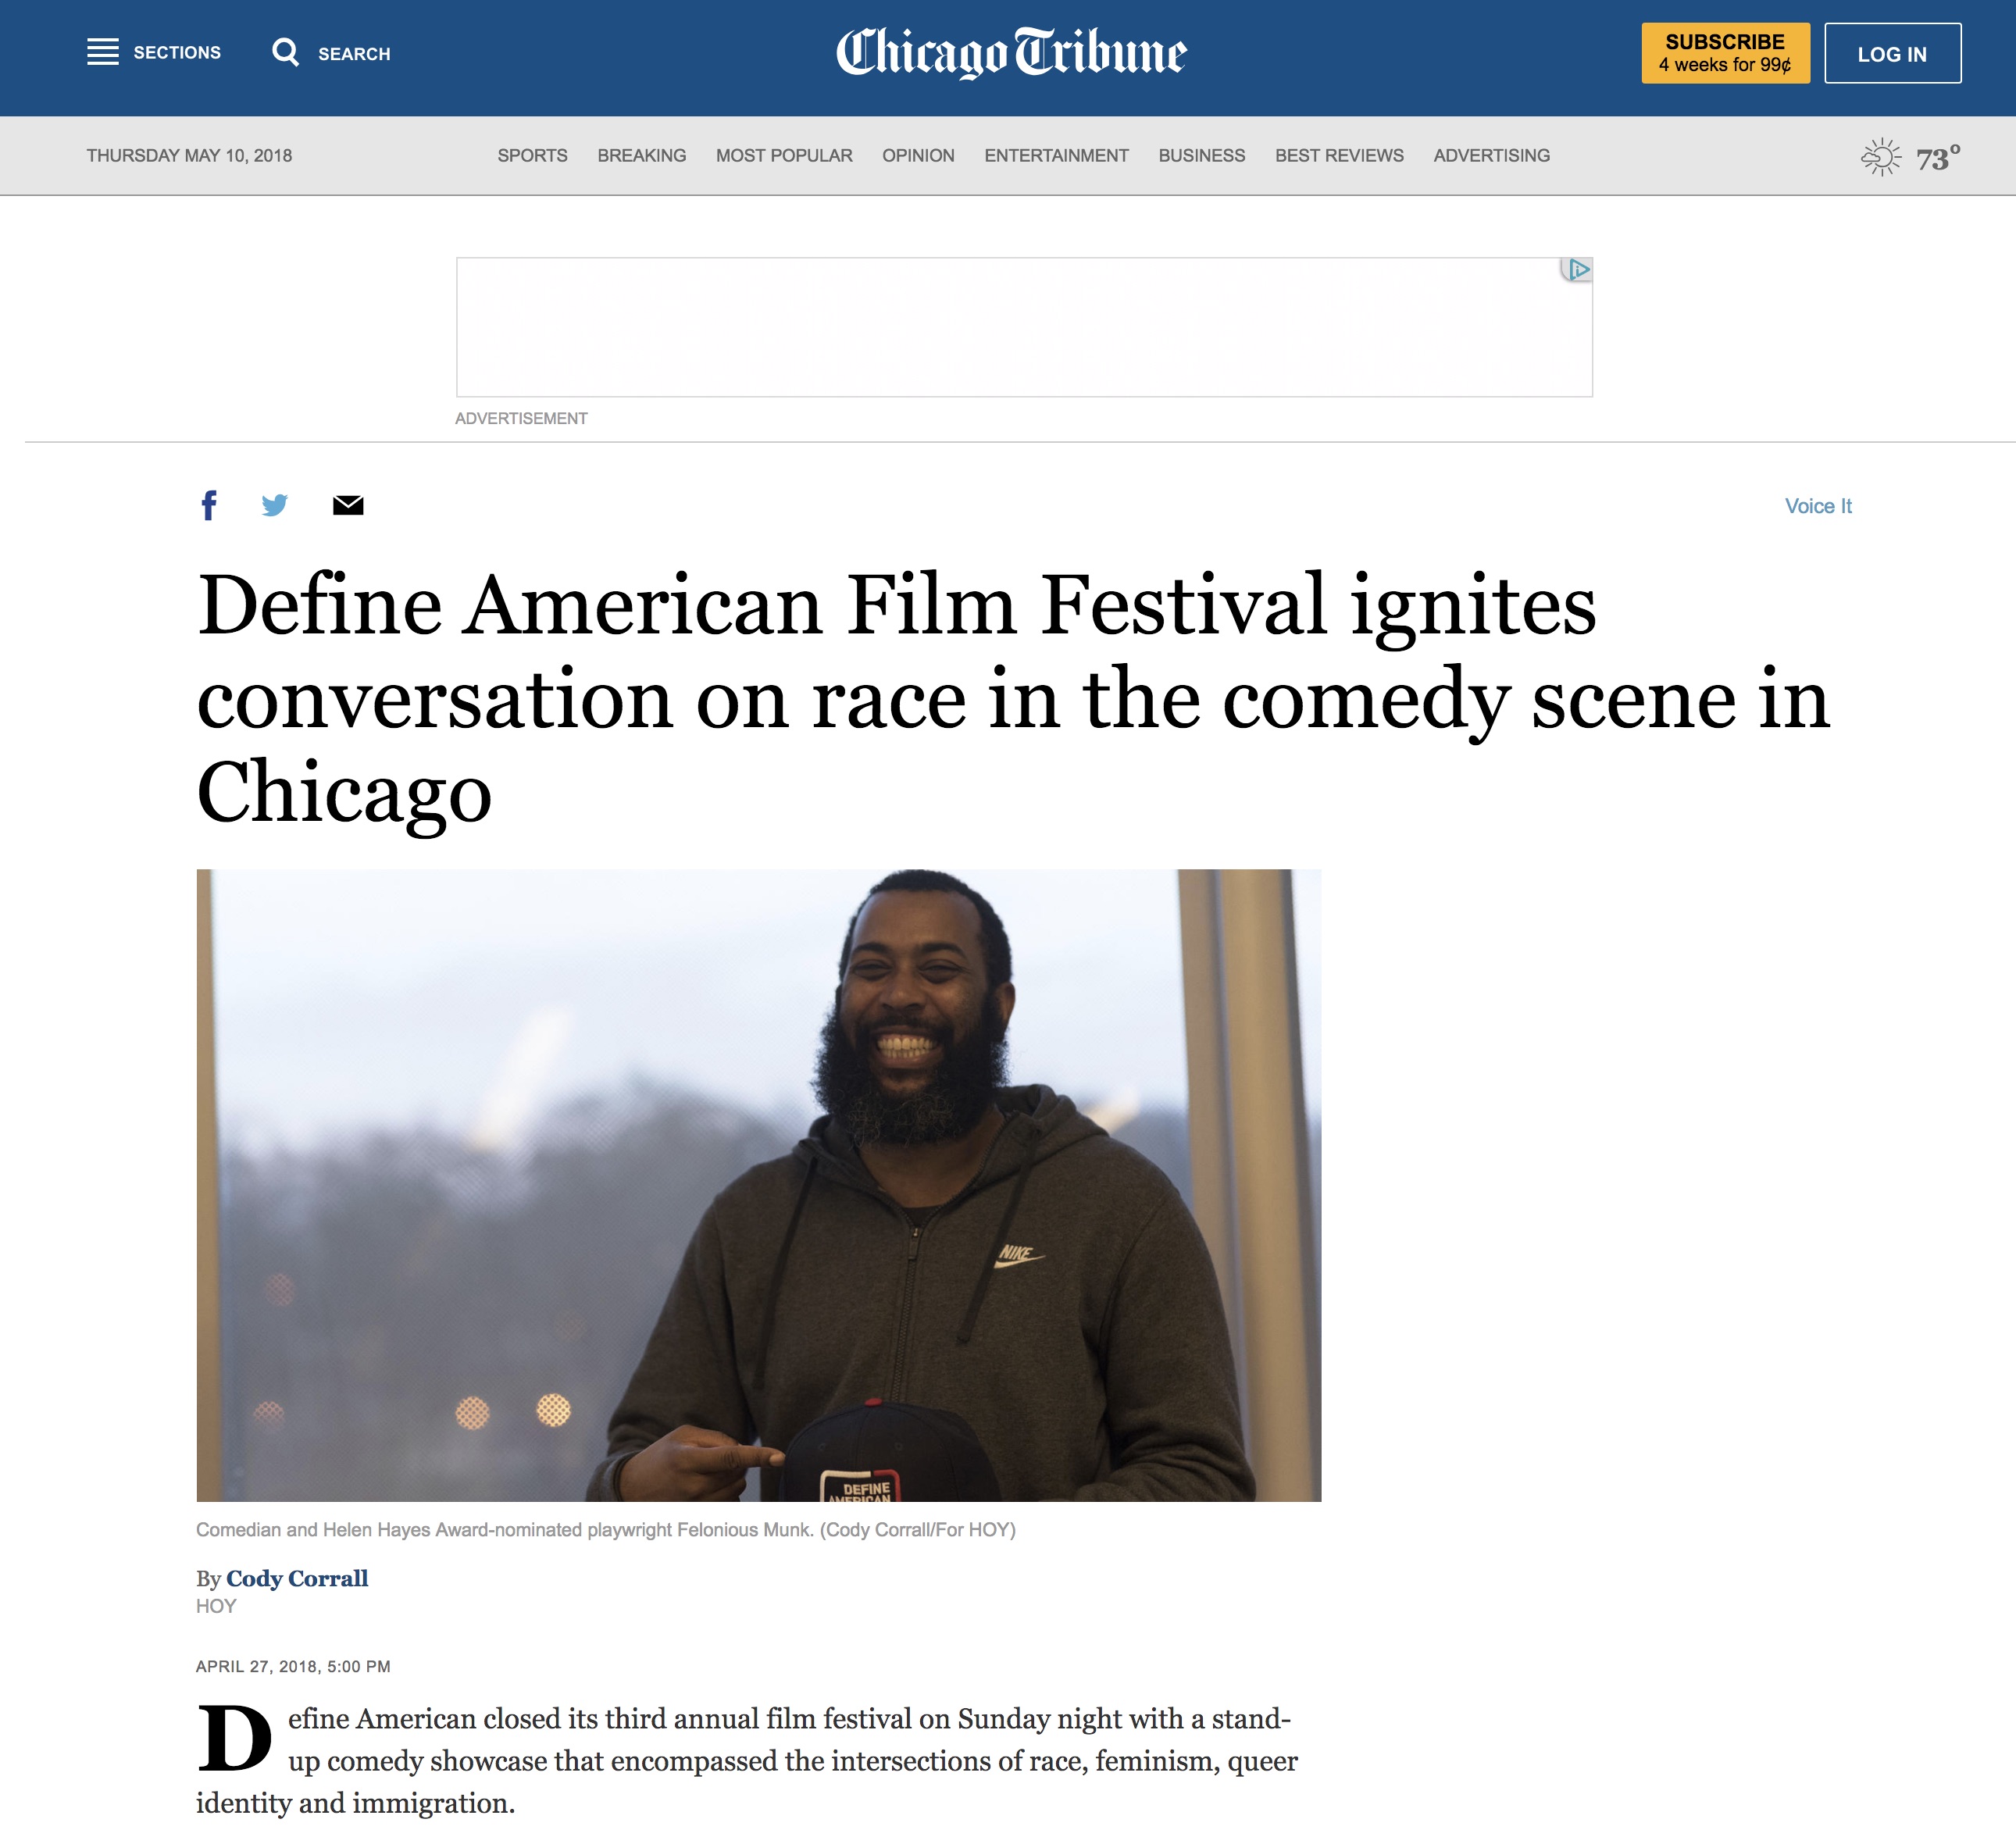 Hoy/Chicago Tribune Student Articles